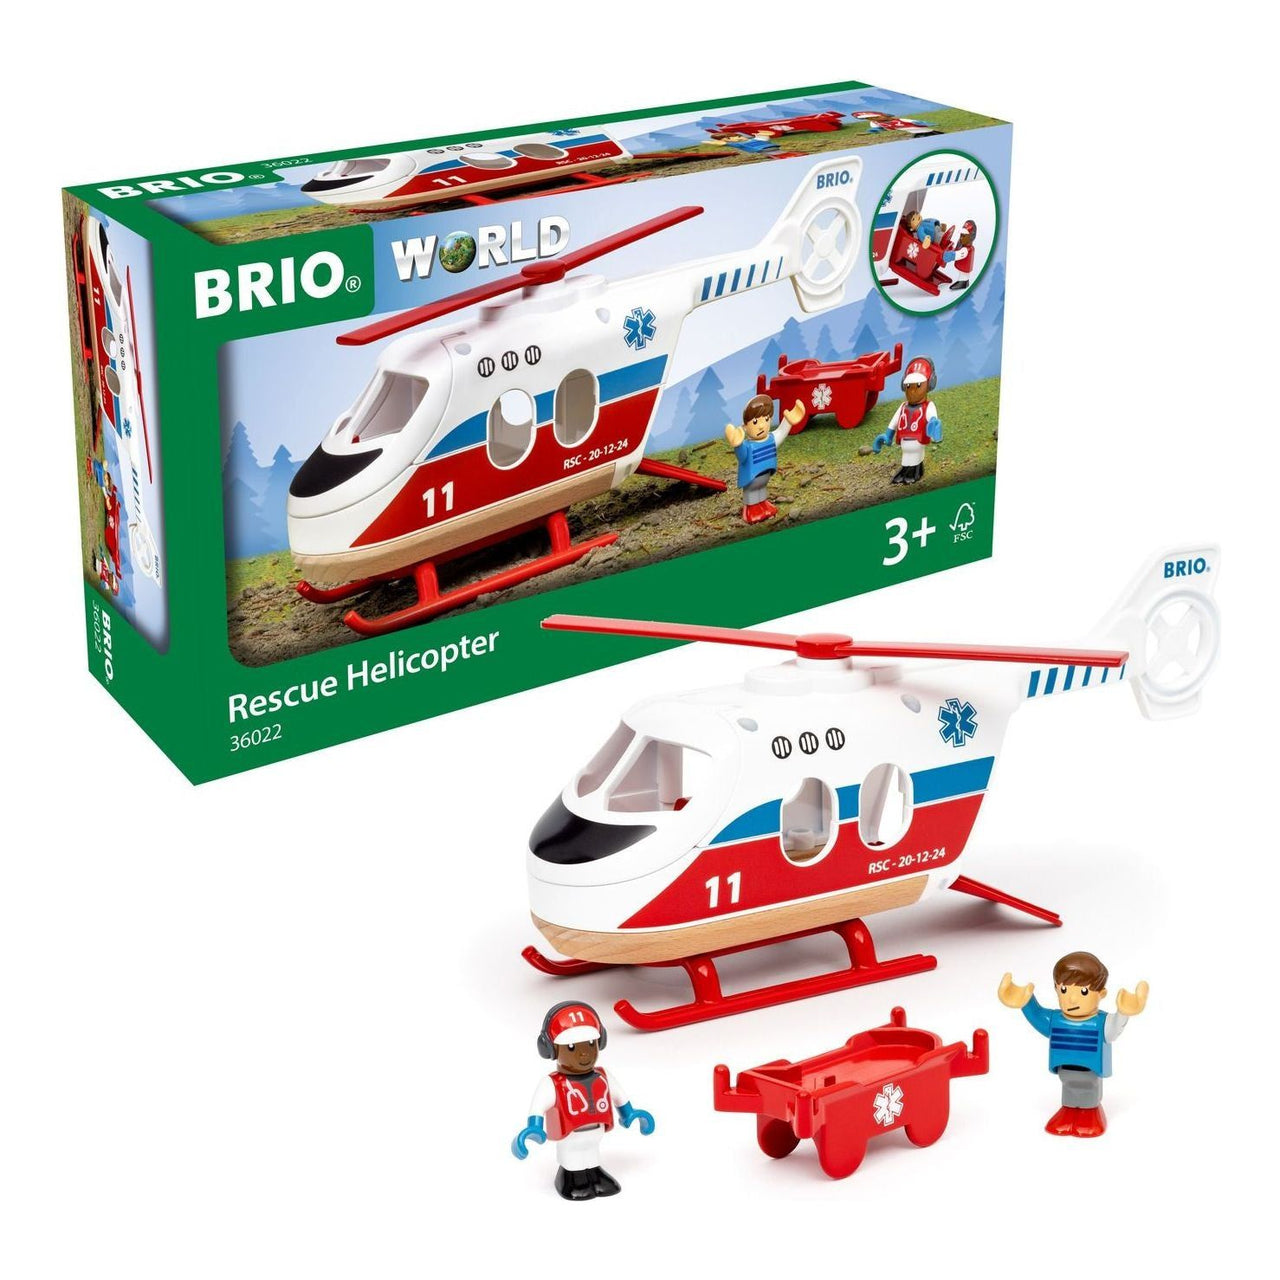 Brio Rescue Helicopter BRIO